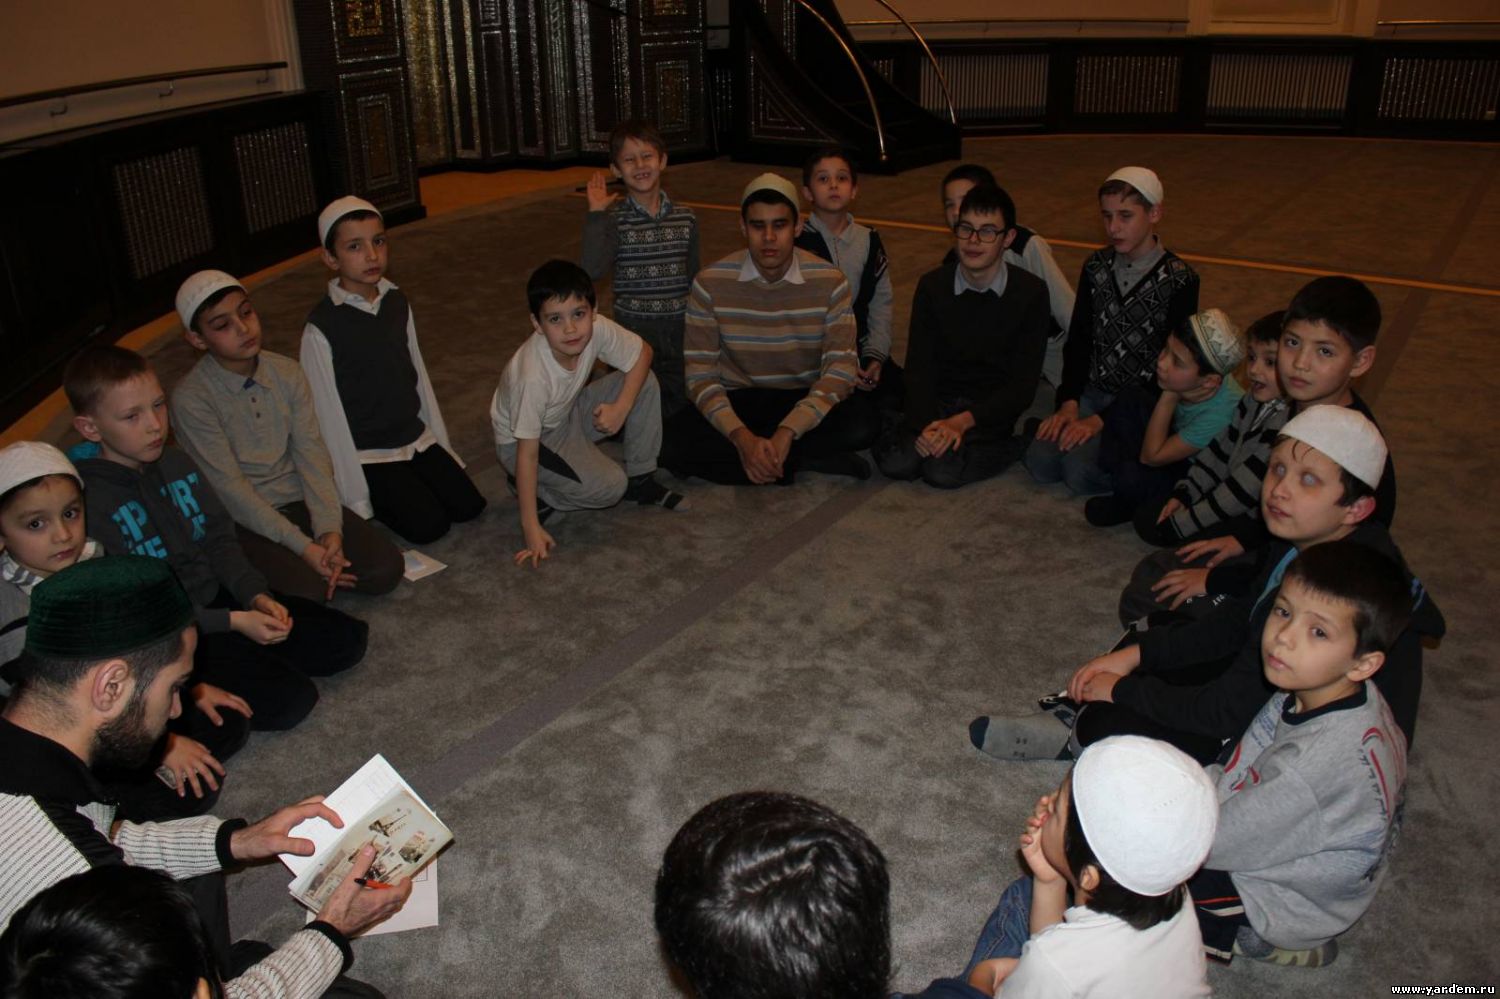 Научиться читать Коран помогут при мечети "Ярдэм" Казани. Курсы по заучиванию Корана